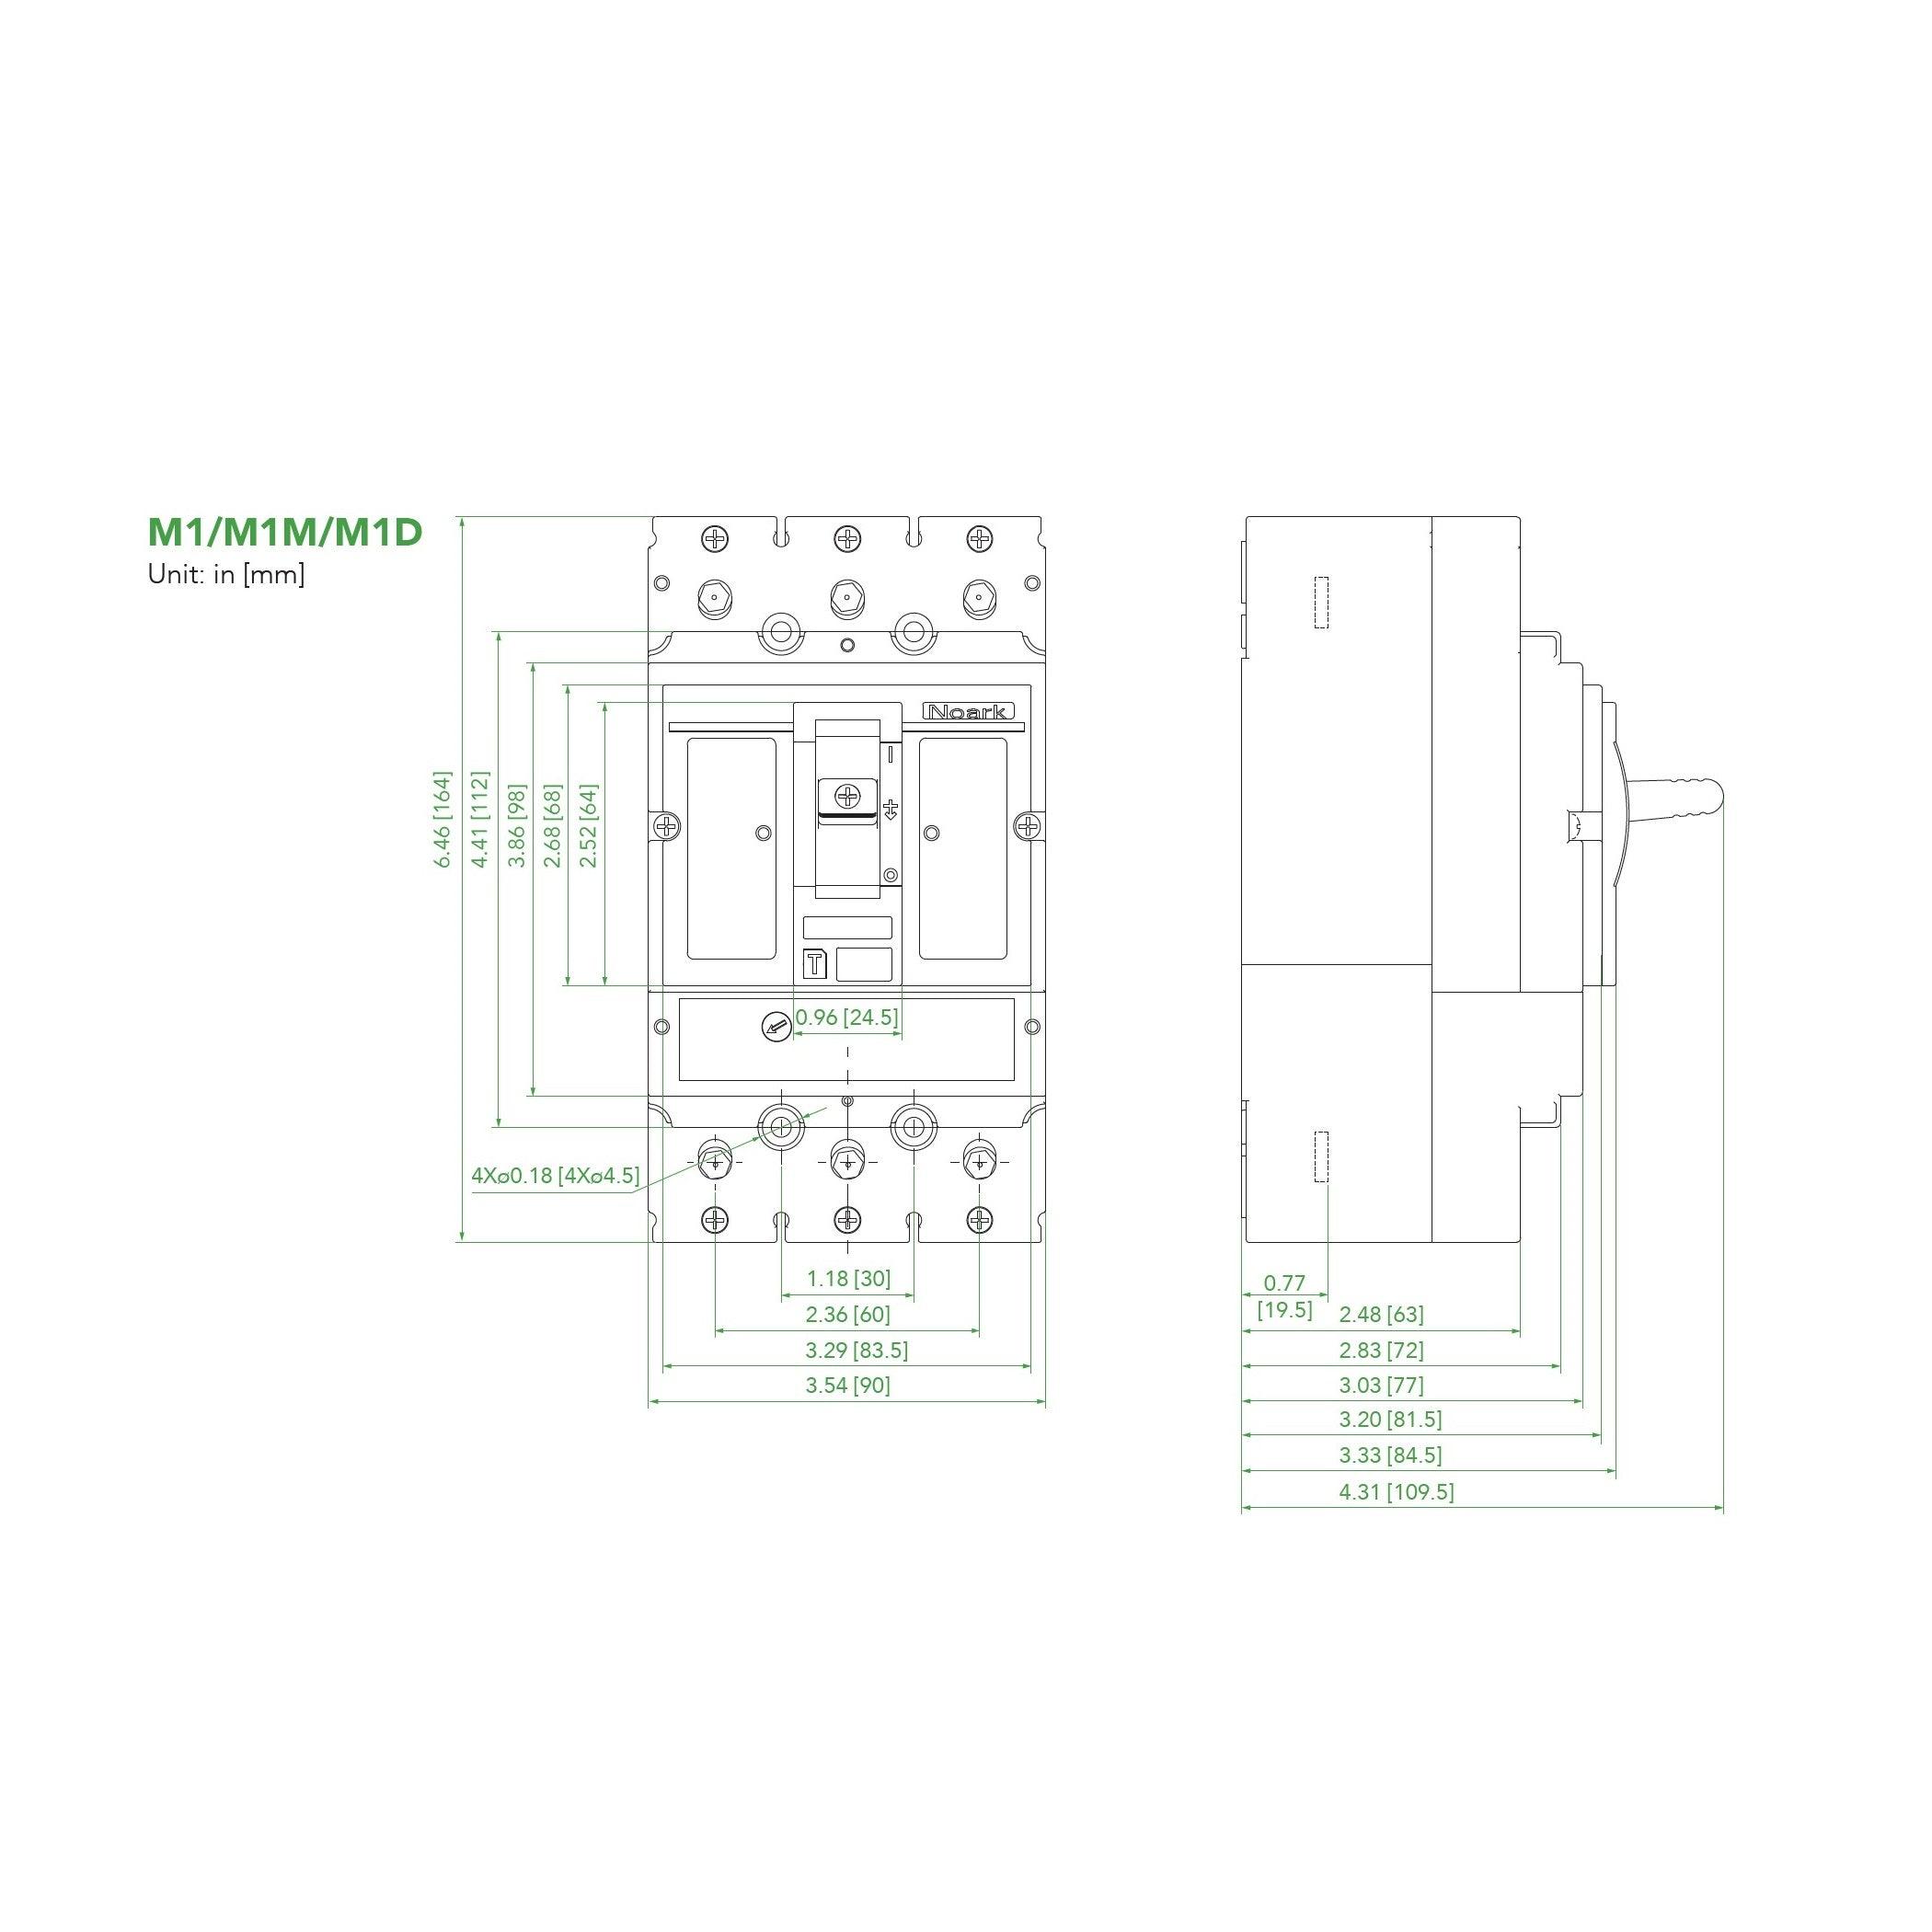 NOARK® Molded Case Circuit Breaker 45A, 3P IC Class N | M1N45T3L - Forces Inc